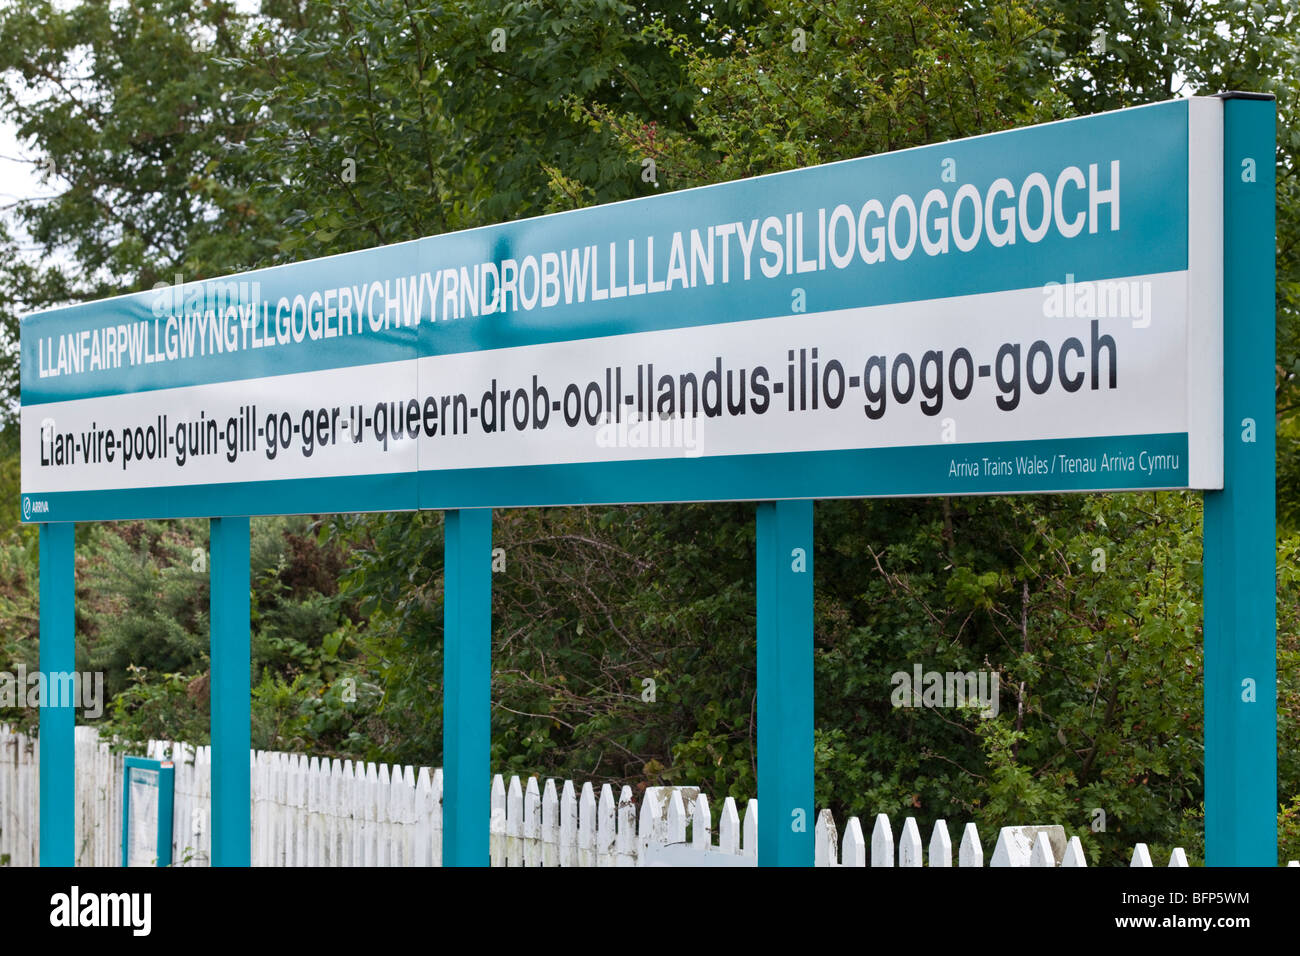 Sign on the station platform at Llanfairpwllgwyngyllgogerychwyrndrobwllllantysiliogogogoch, Isle of Anglesey, North Wales UK Stock Photo